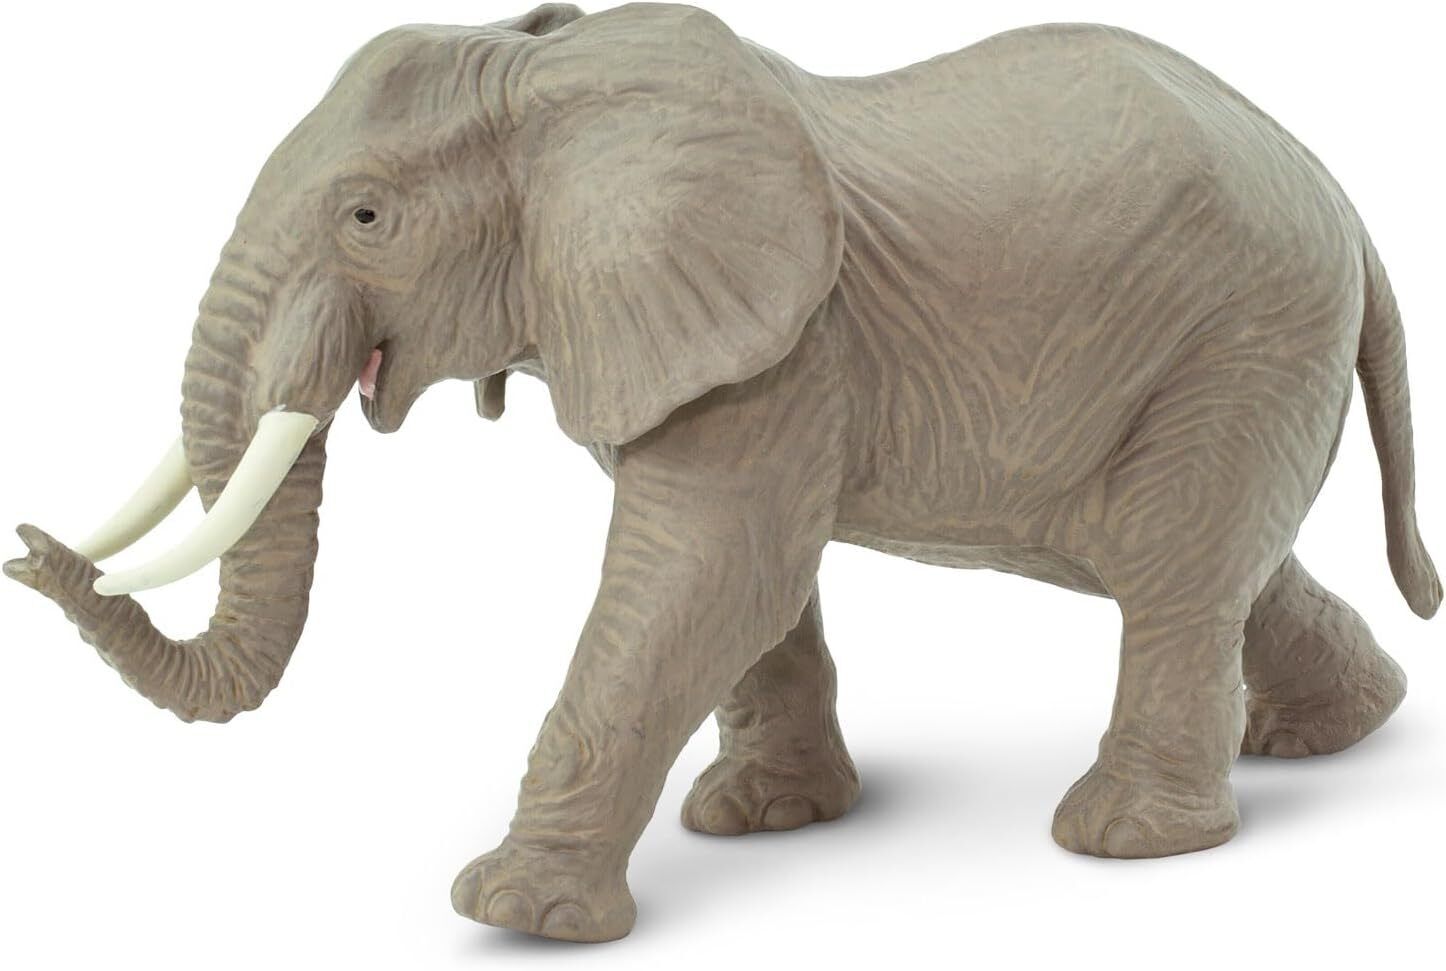 Safari Ltd. African Elephant Toy Figurine - Detailed, Hand-Painted 6.5